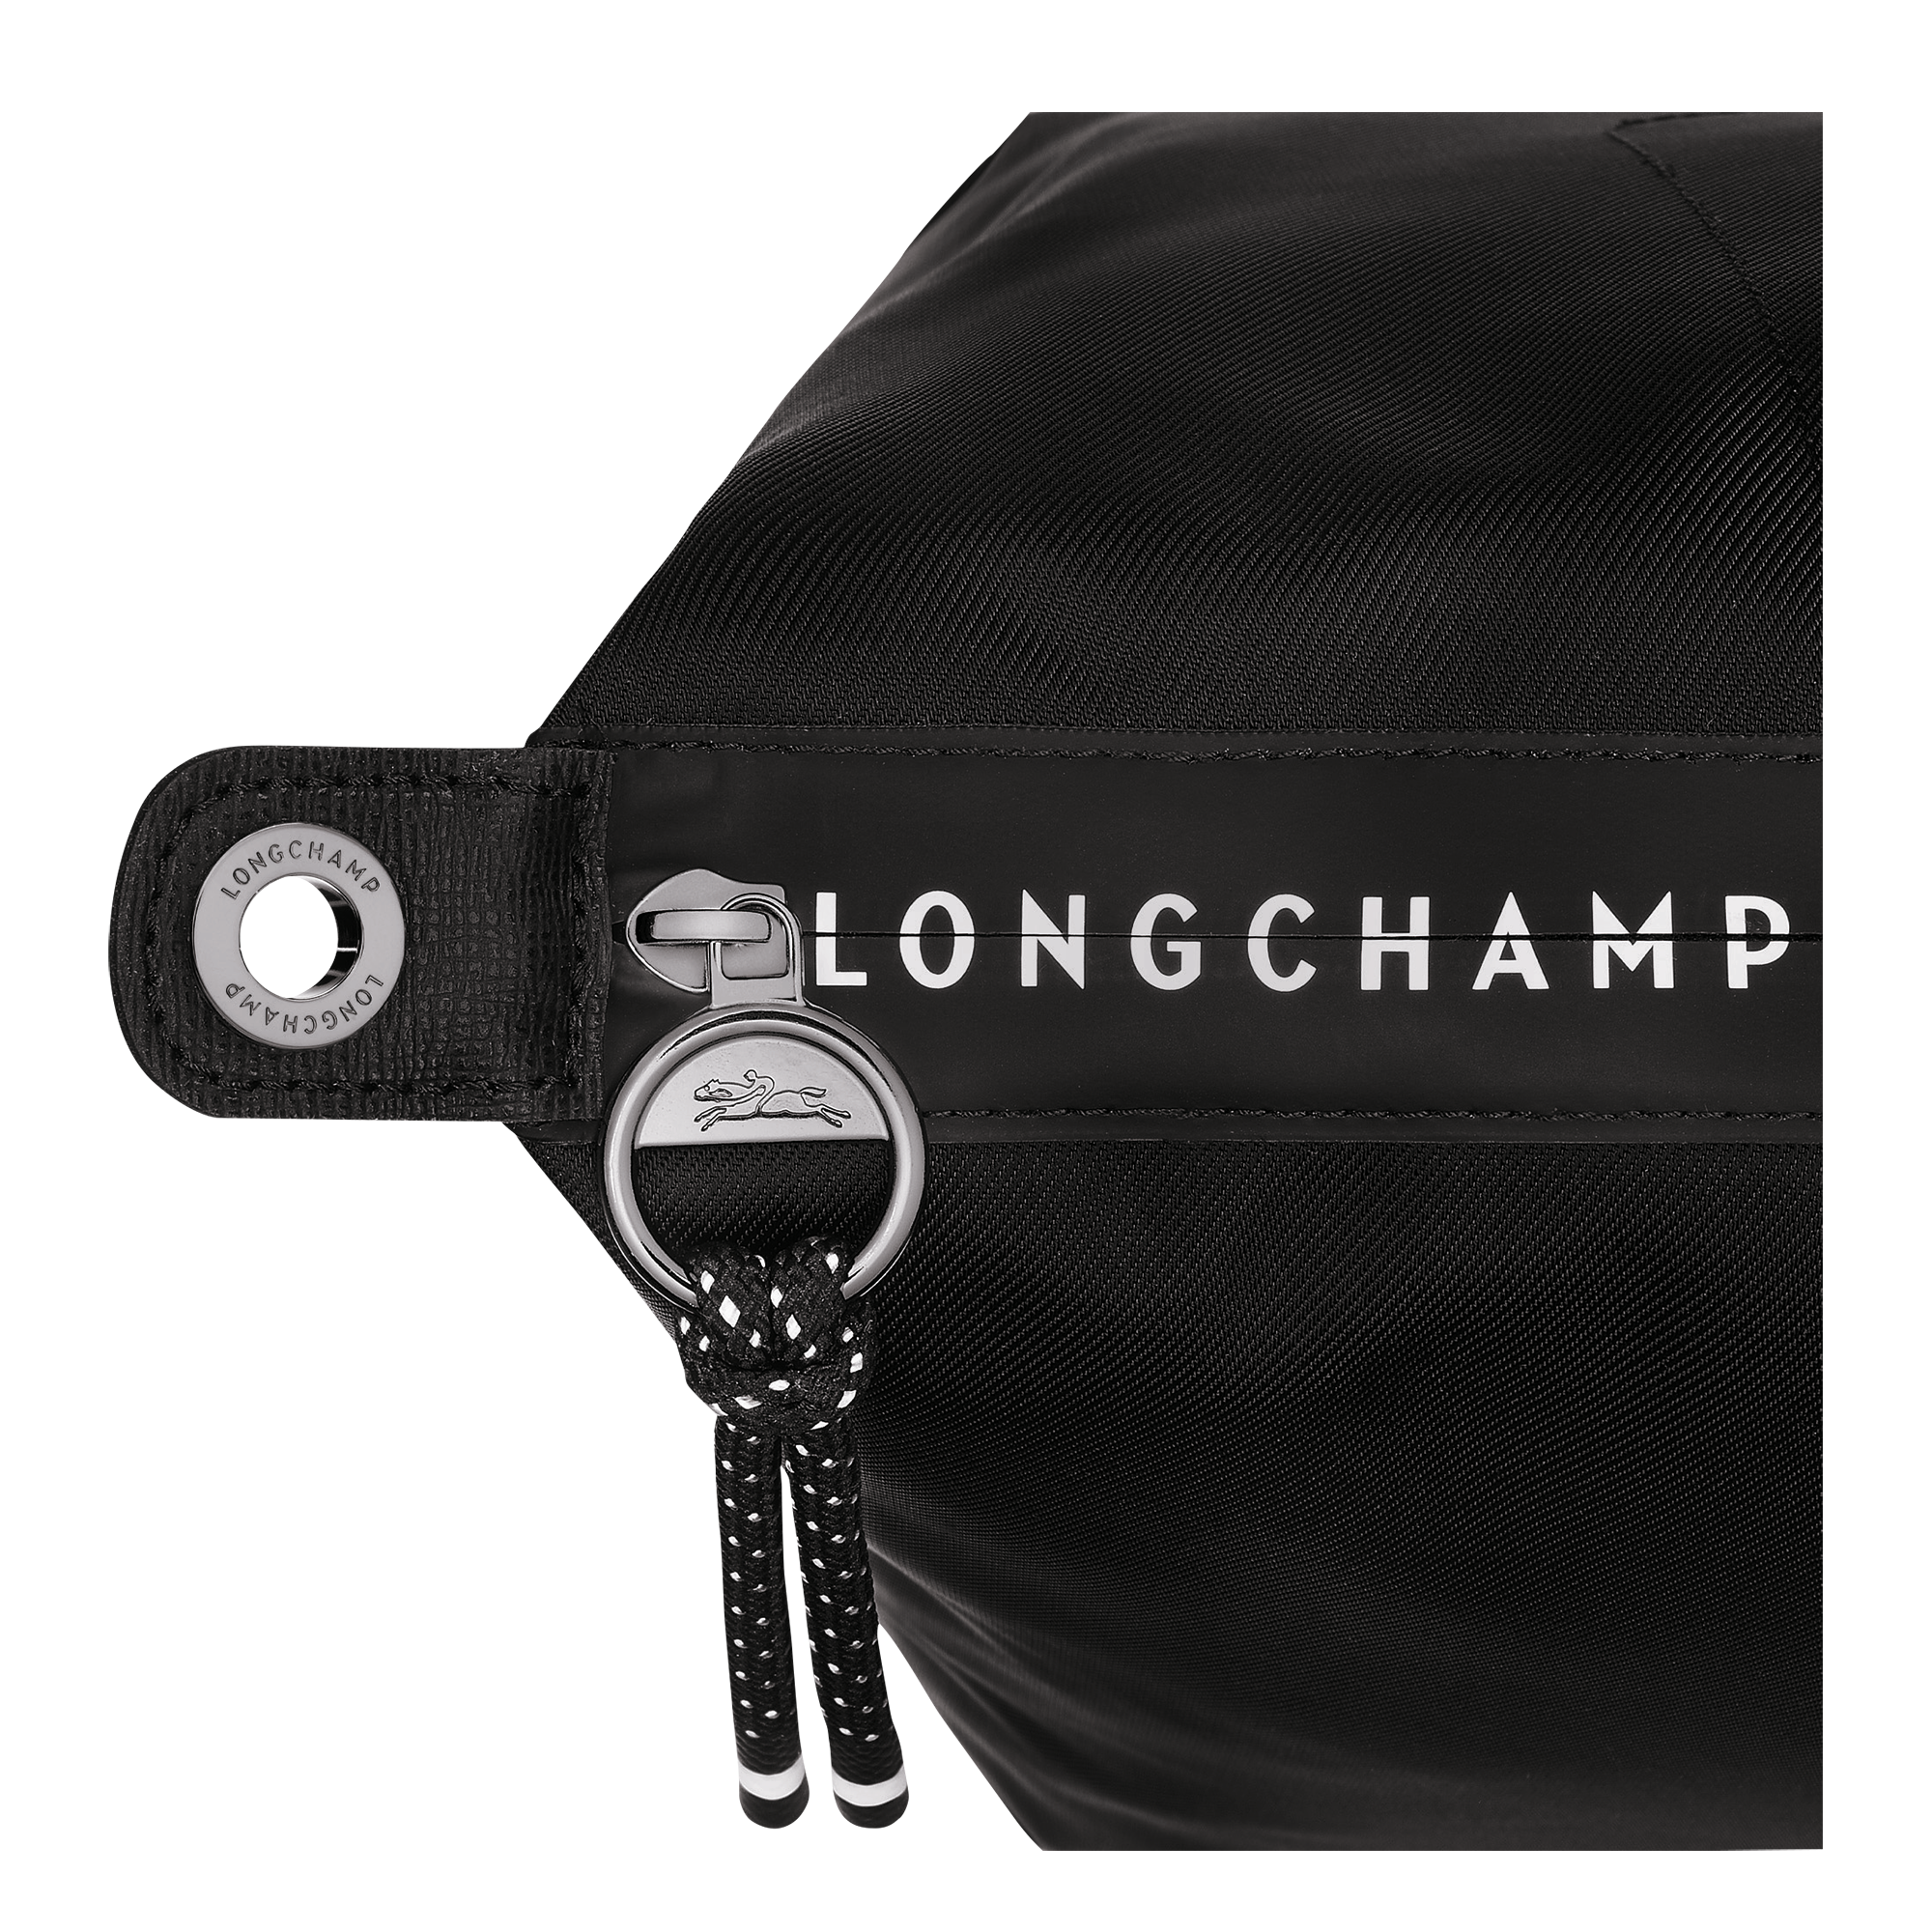 Le Pliage Energy Handbag XL, Black